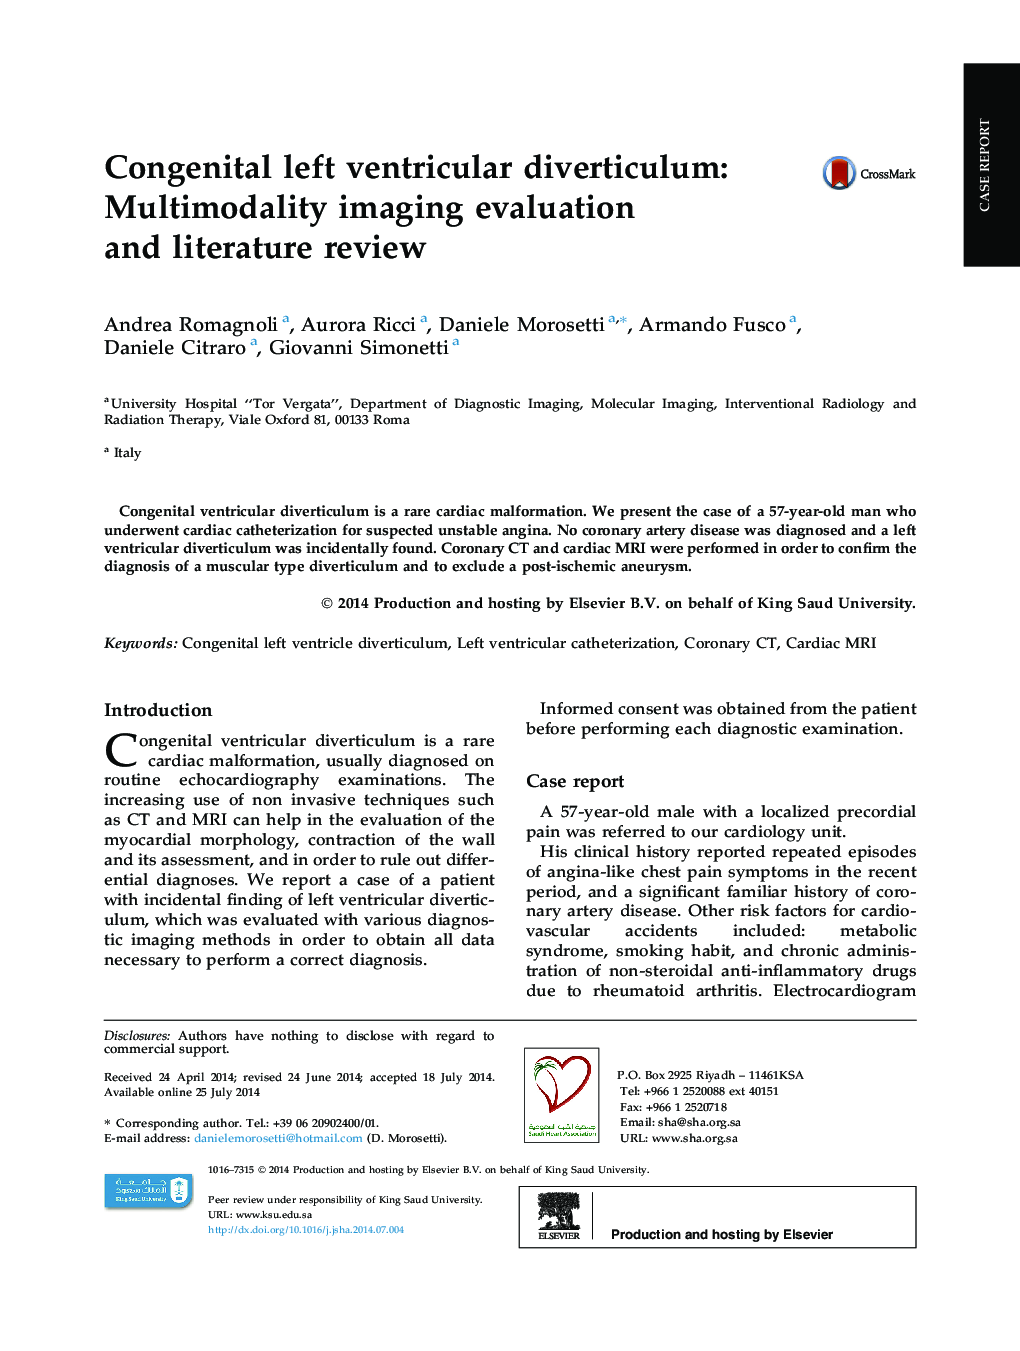 Congenital left ventricular diverticulum: Multimodality imaging evaluation and literature review 